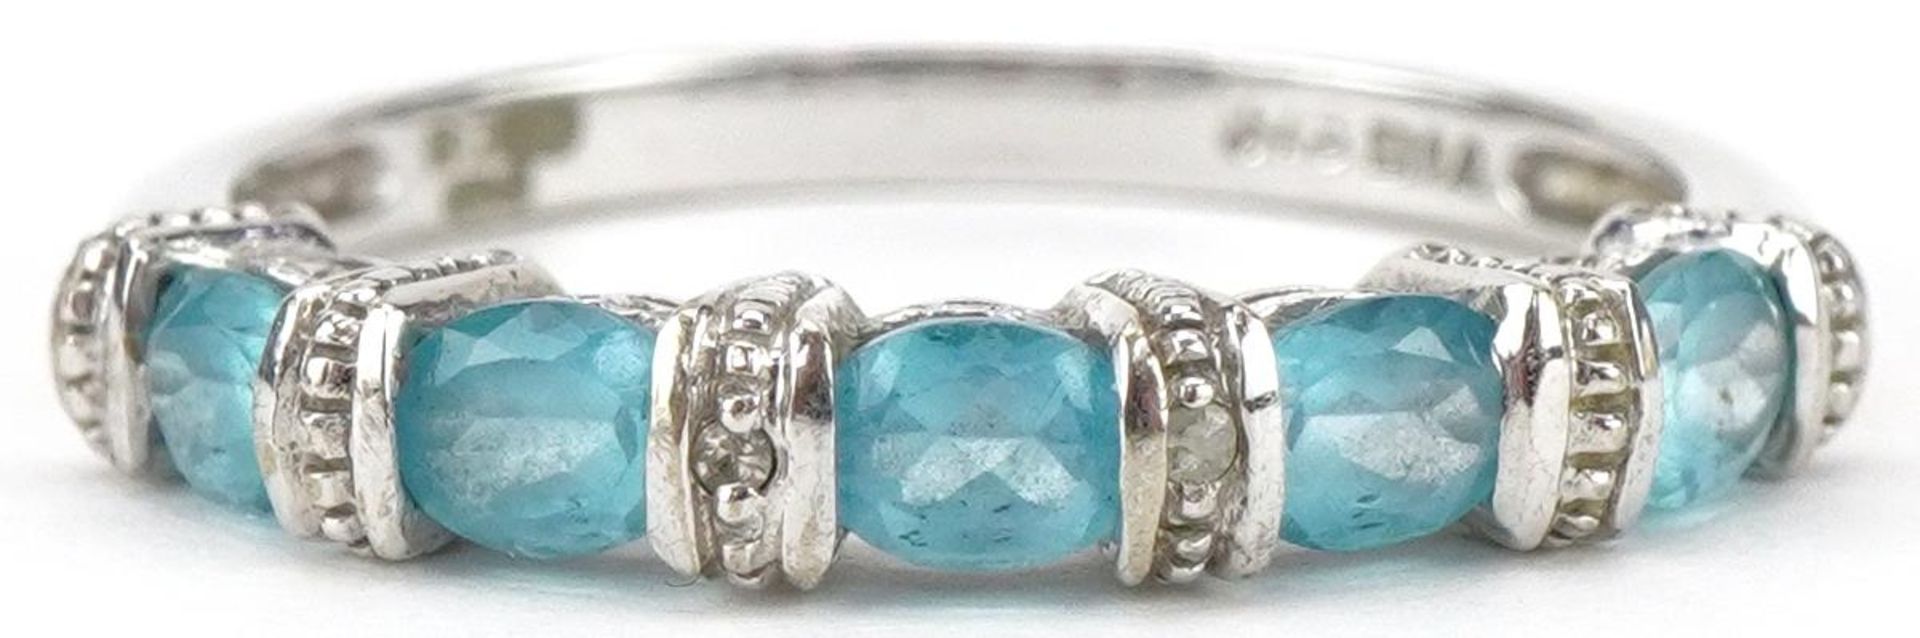 9ct white gold aquamarine and diamond half eternity ring, size O/P, 2.2g